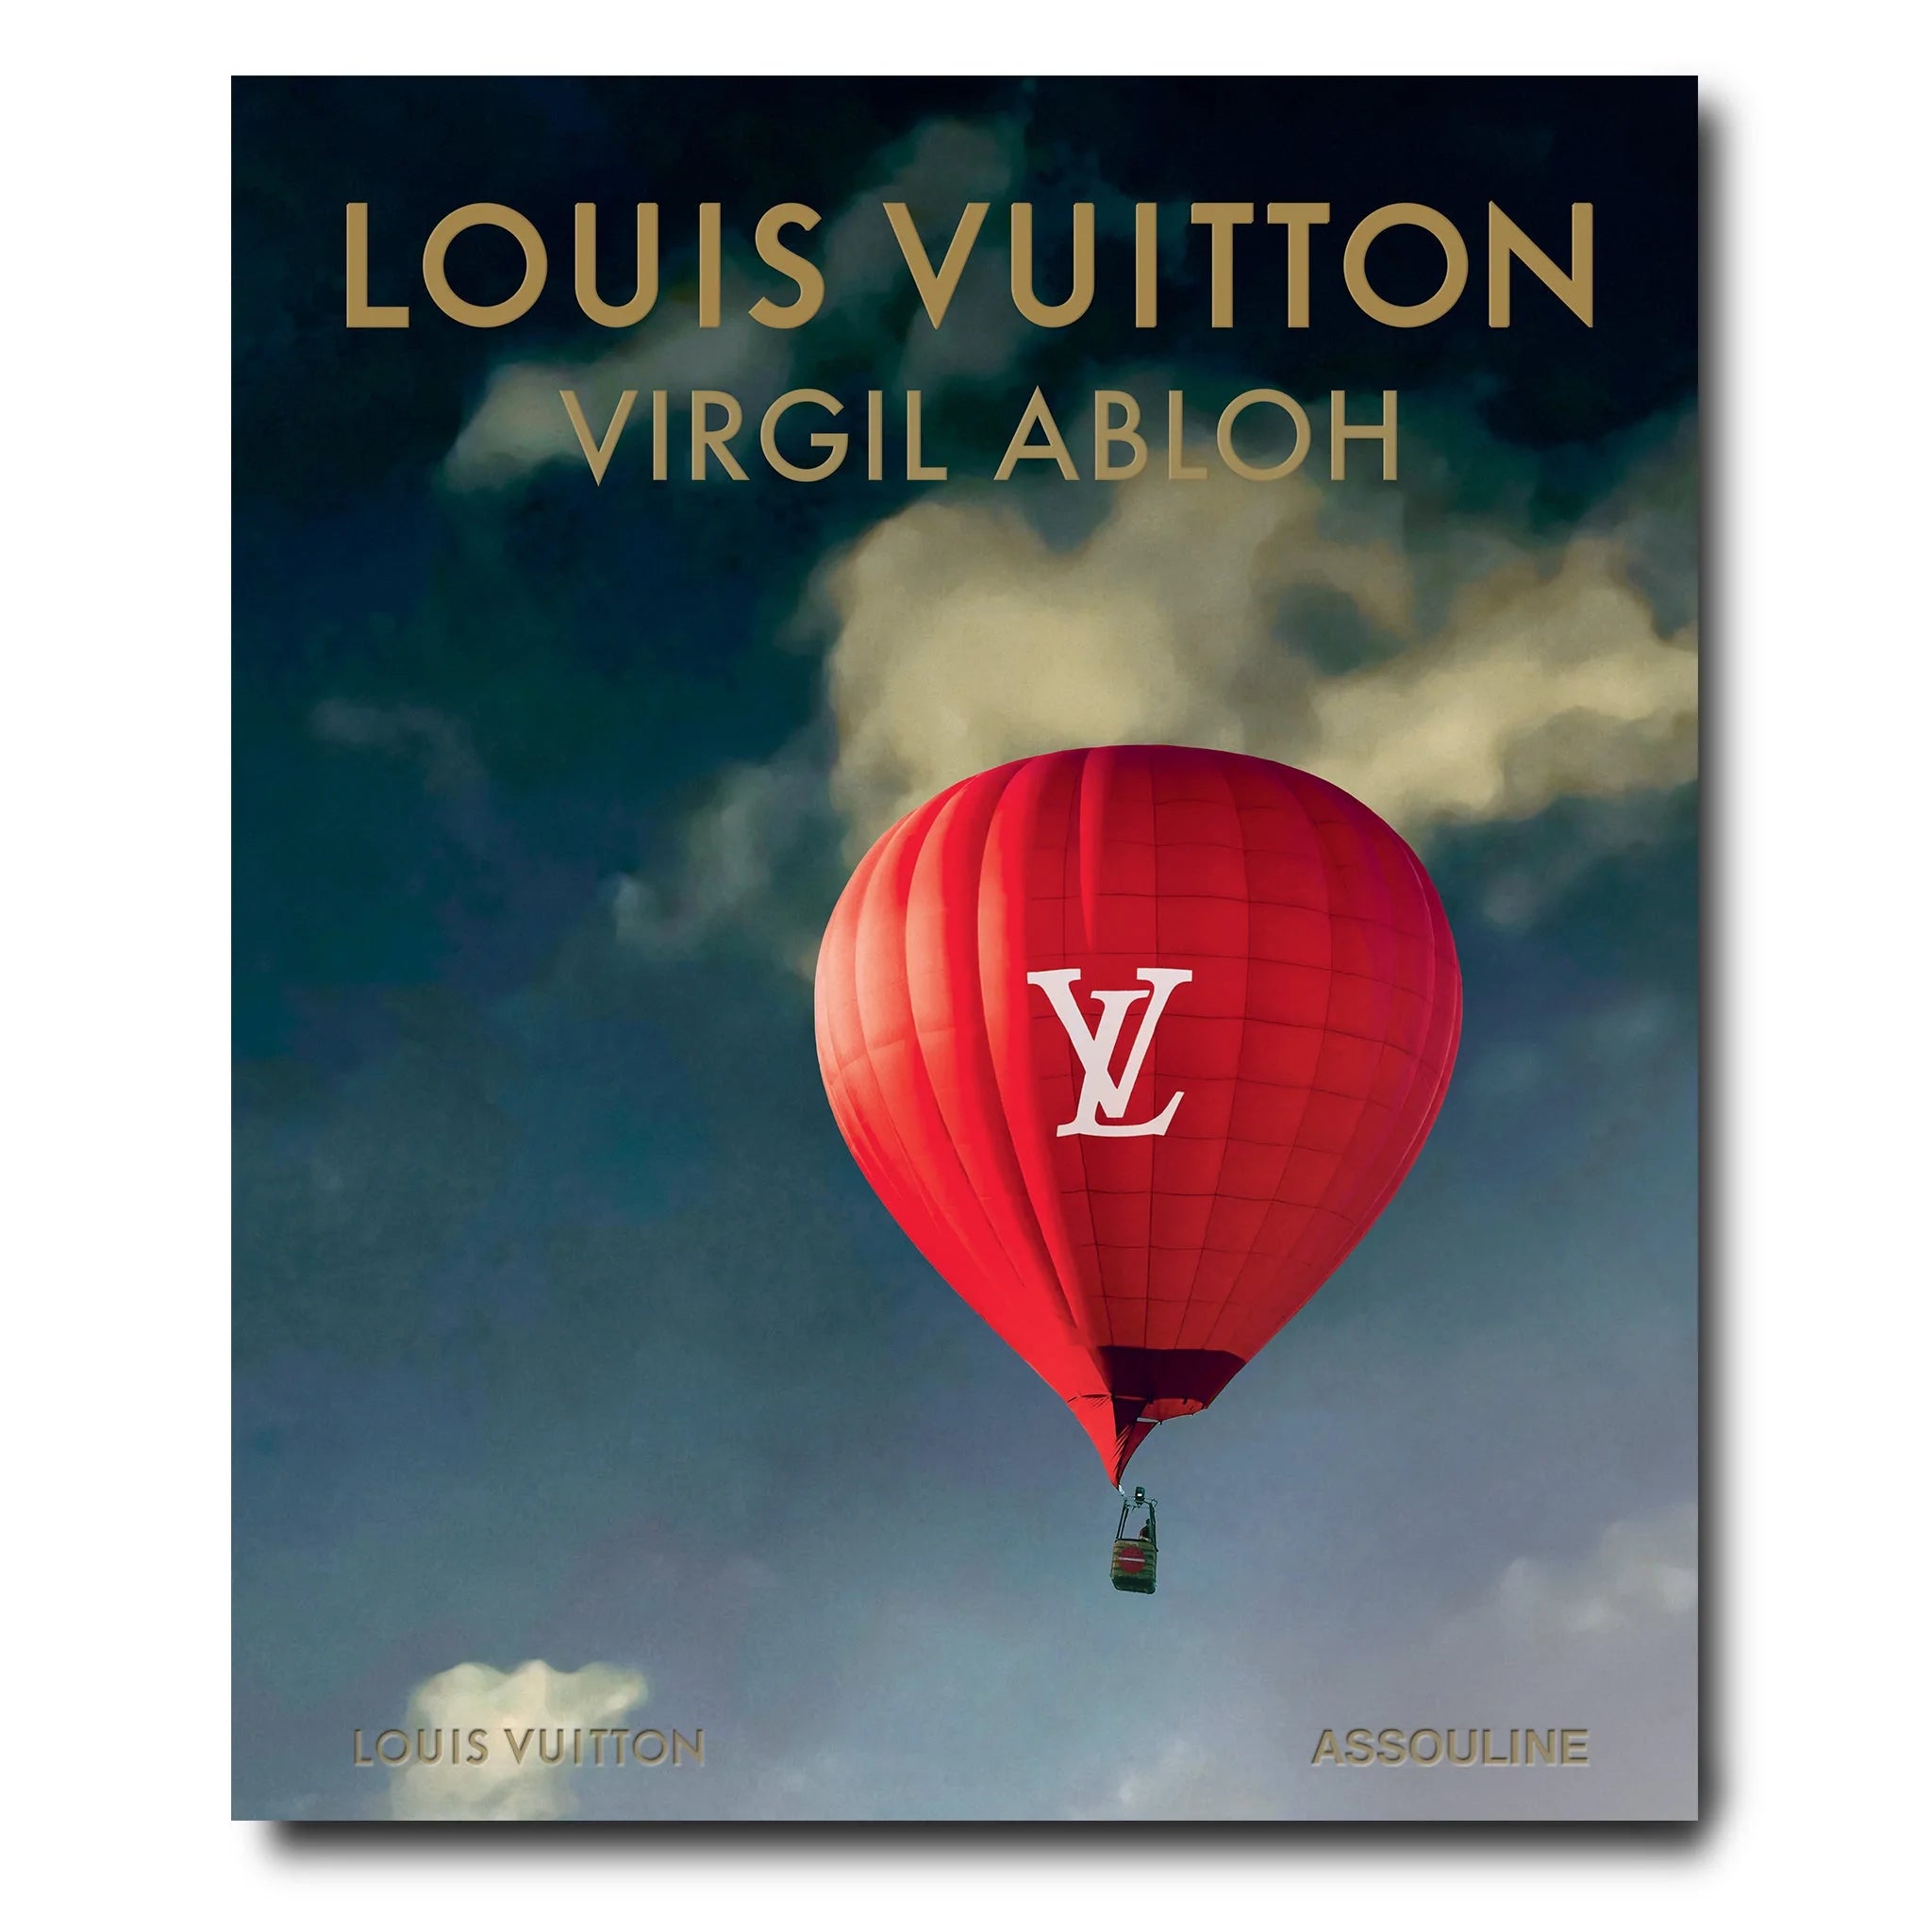 Kid Cudi Wears a Virgil Abloh-Designed Louis Vuitton Cardigan on